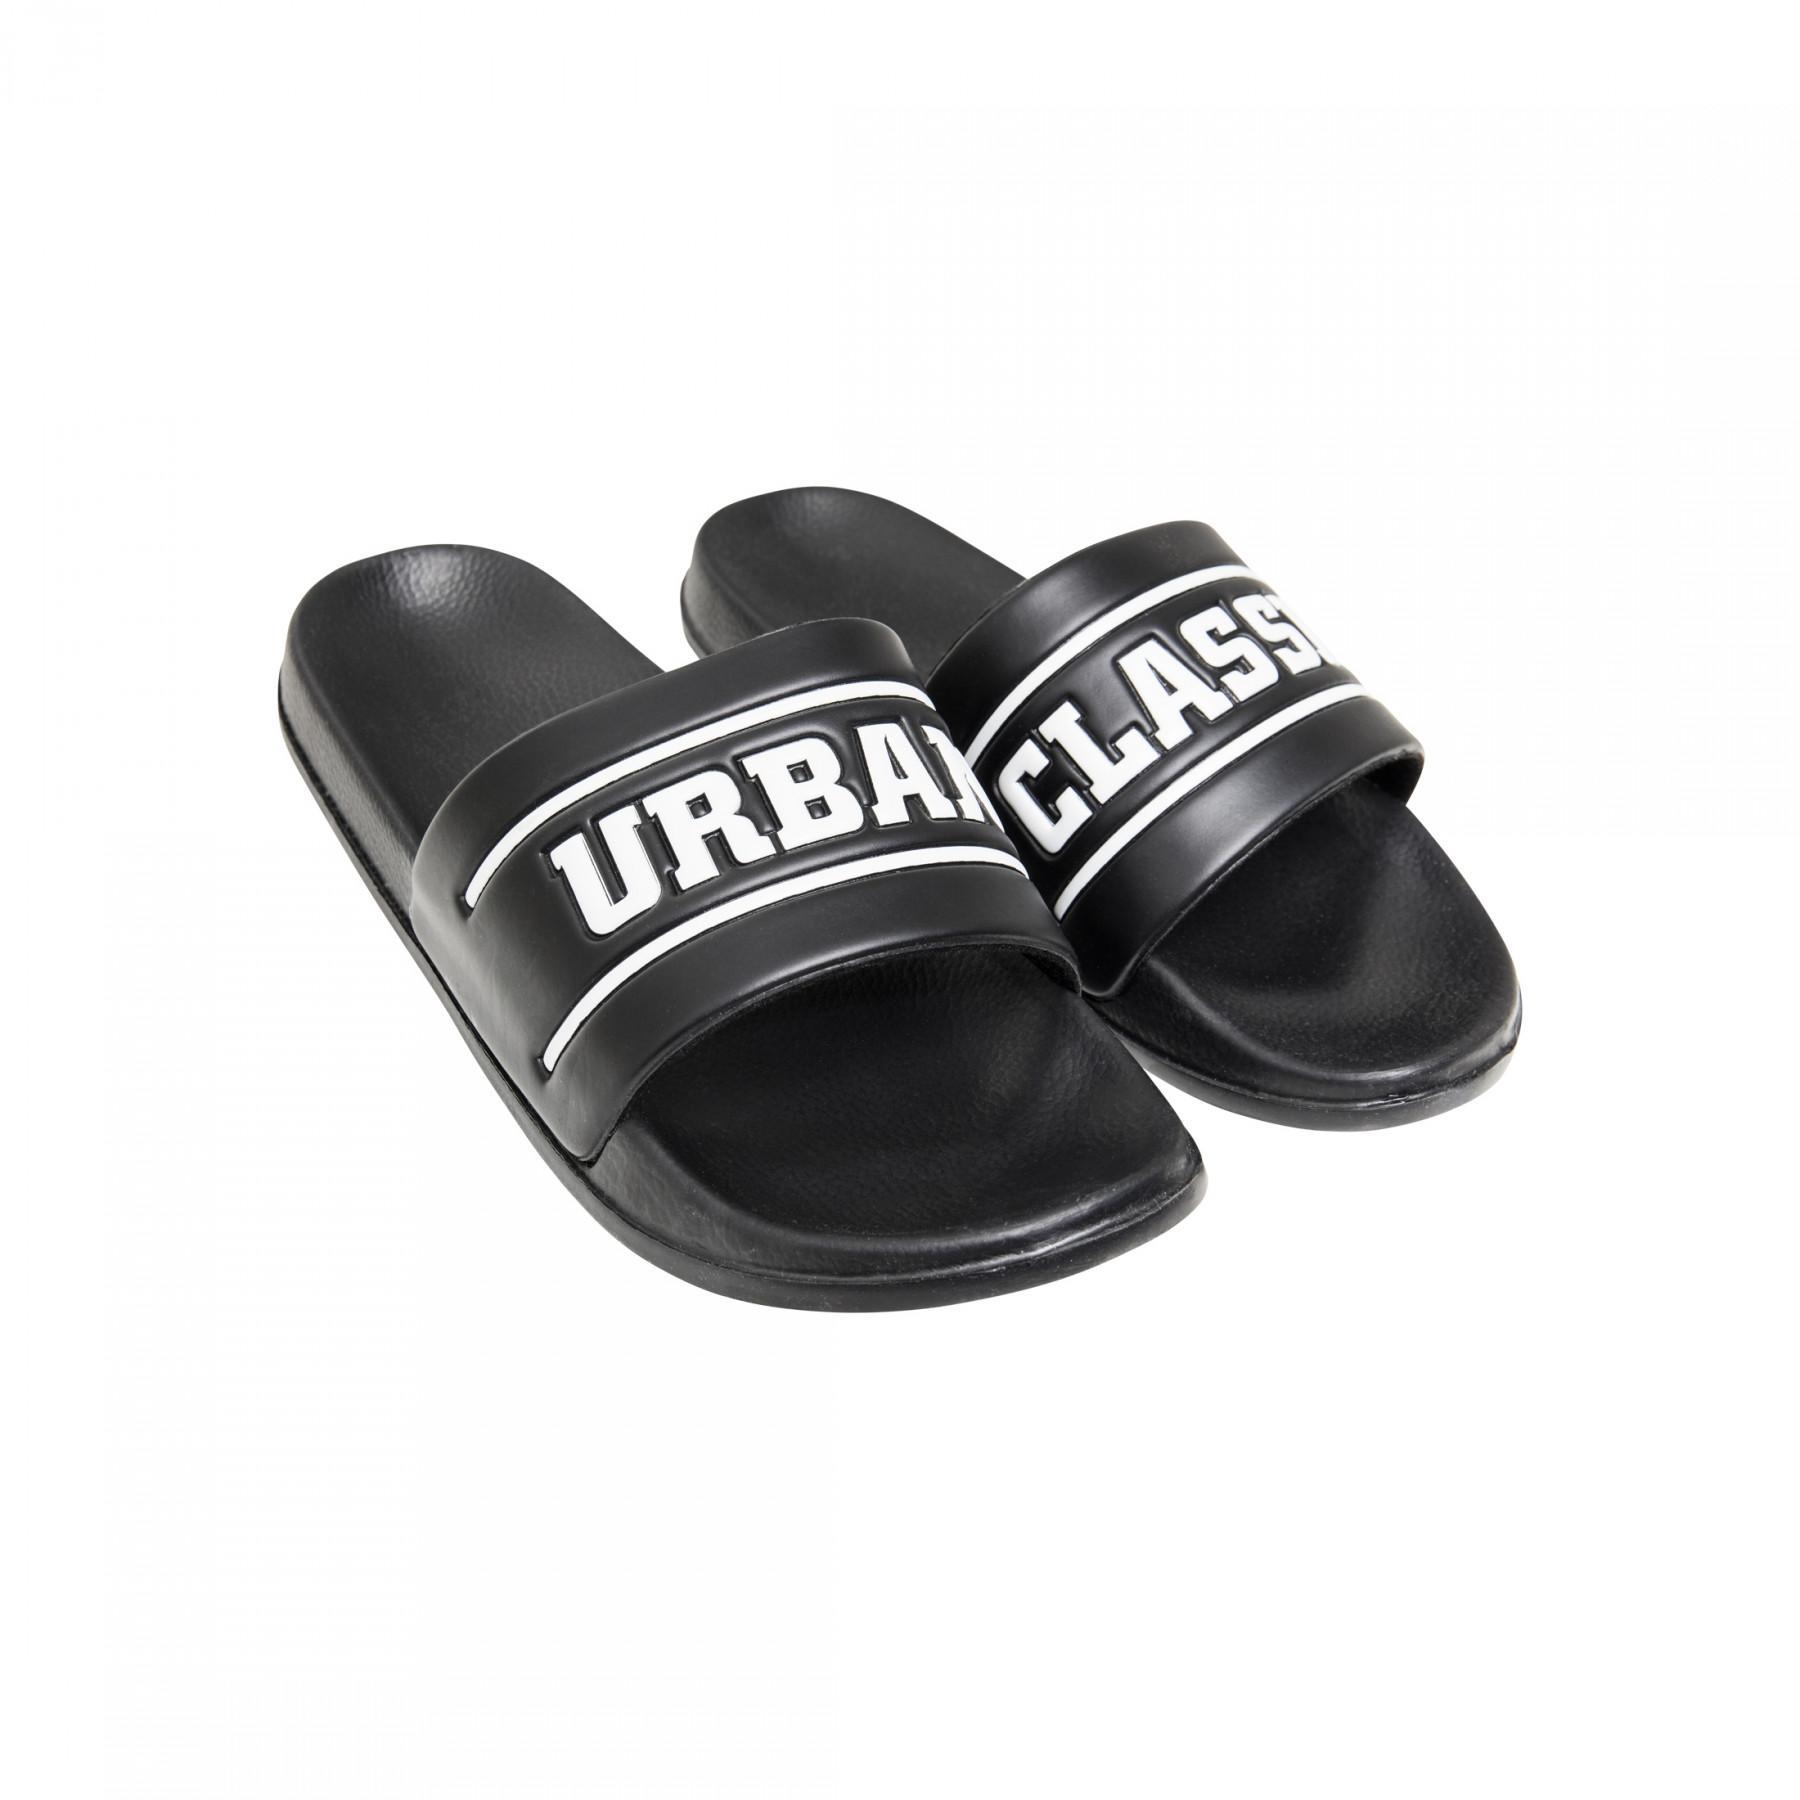 Urban classic slides sneakers